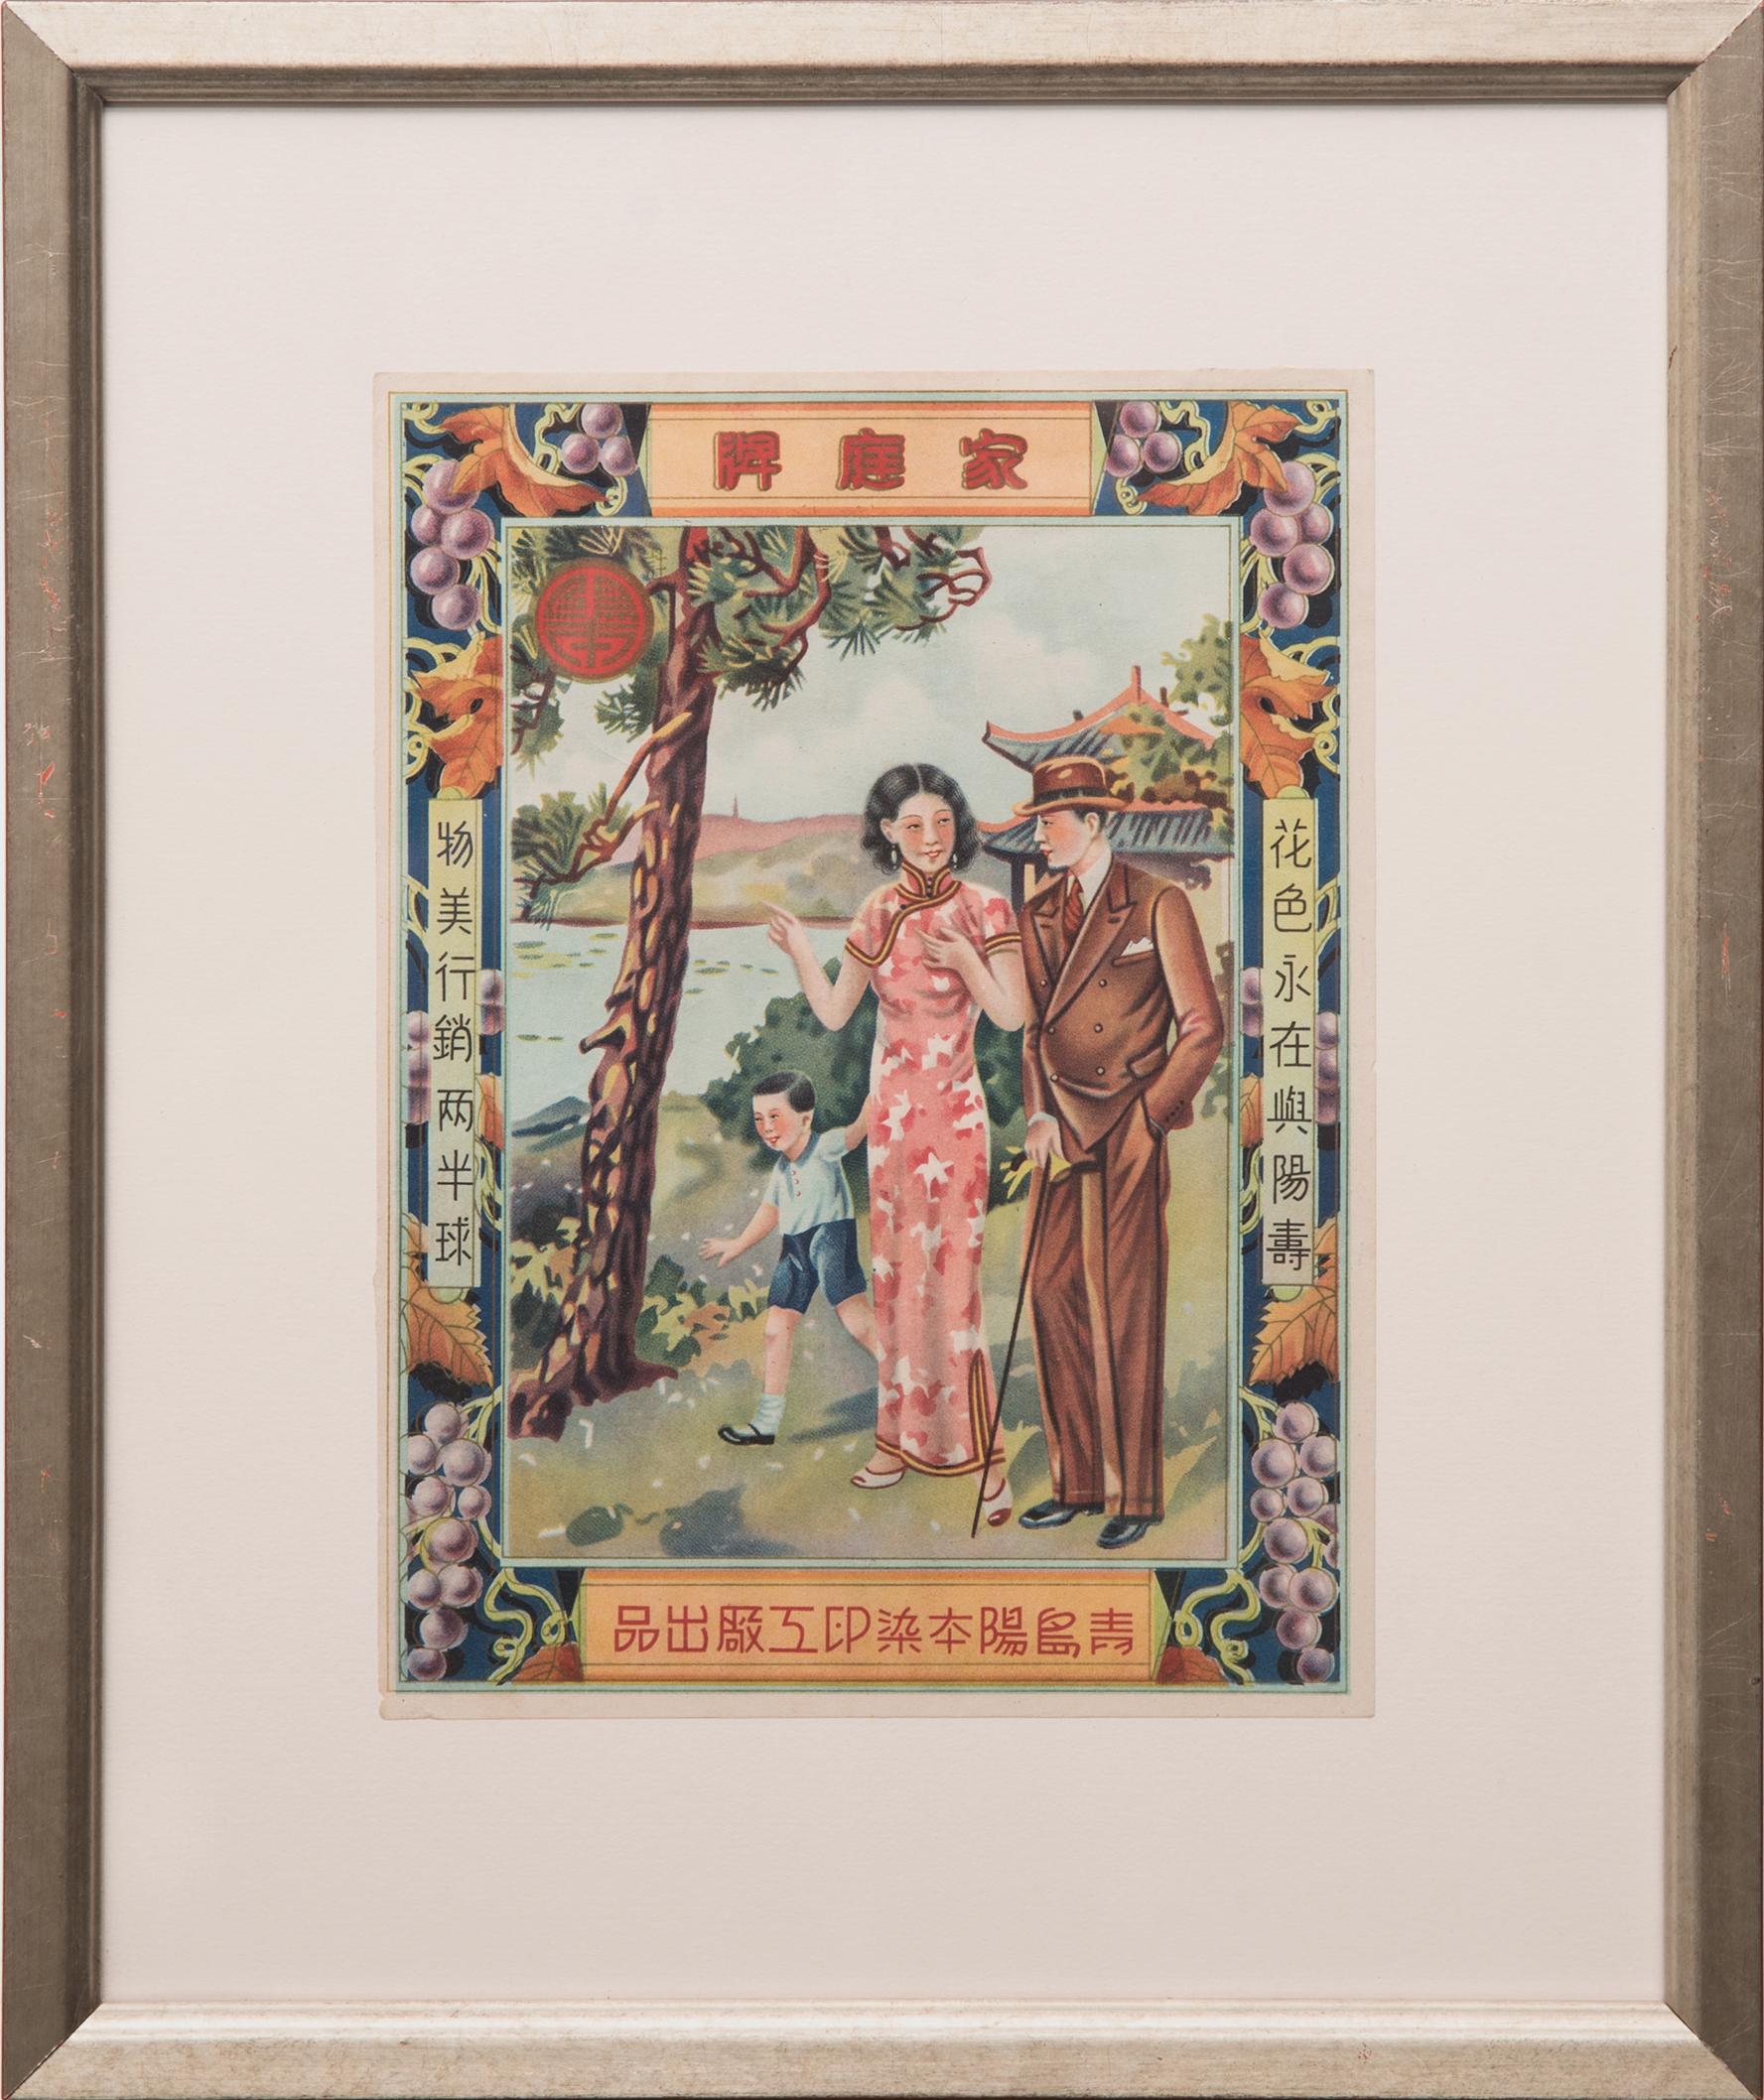 Vintage Chinese Republic Period Advertisement